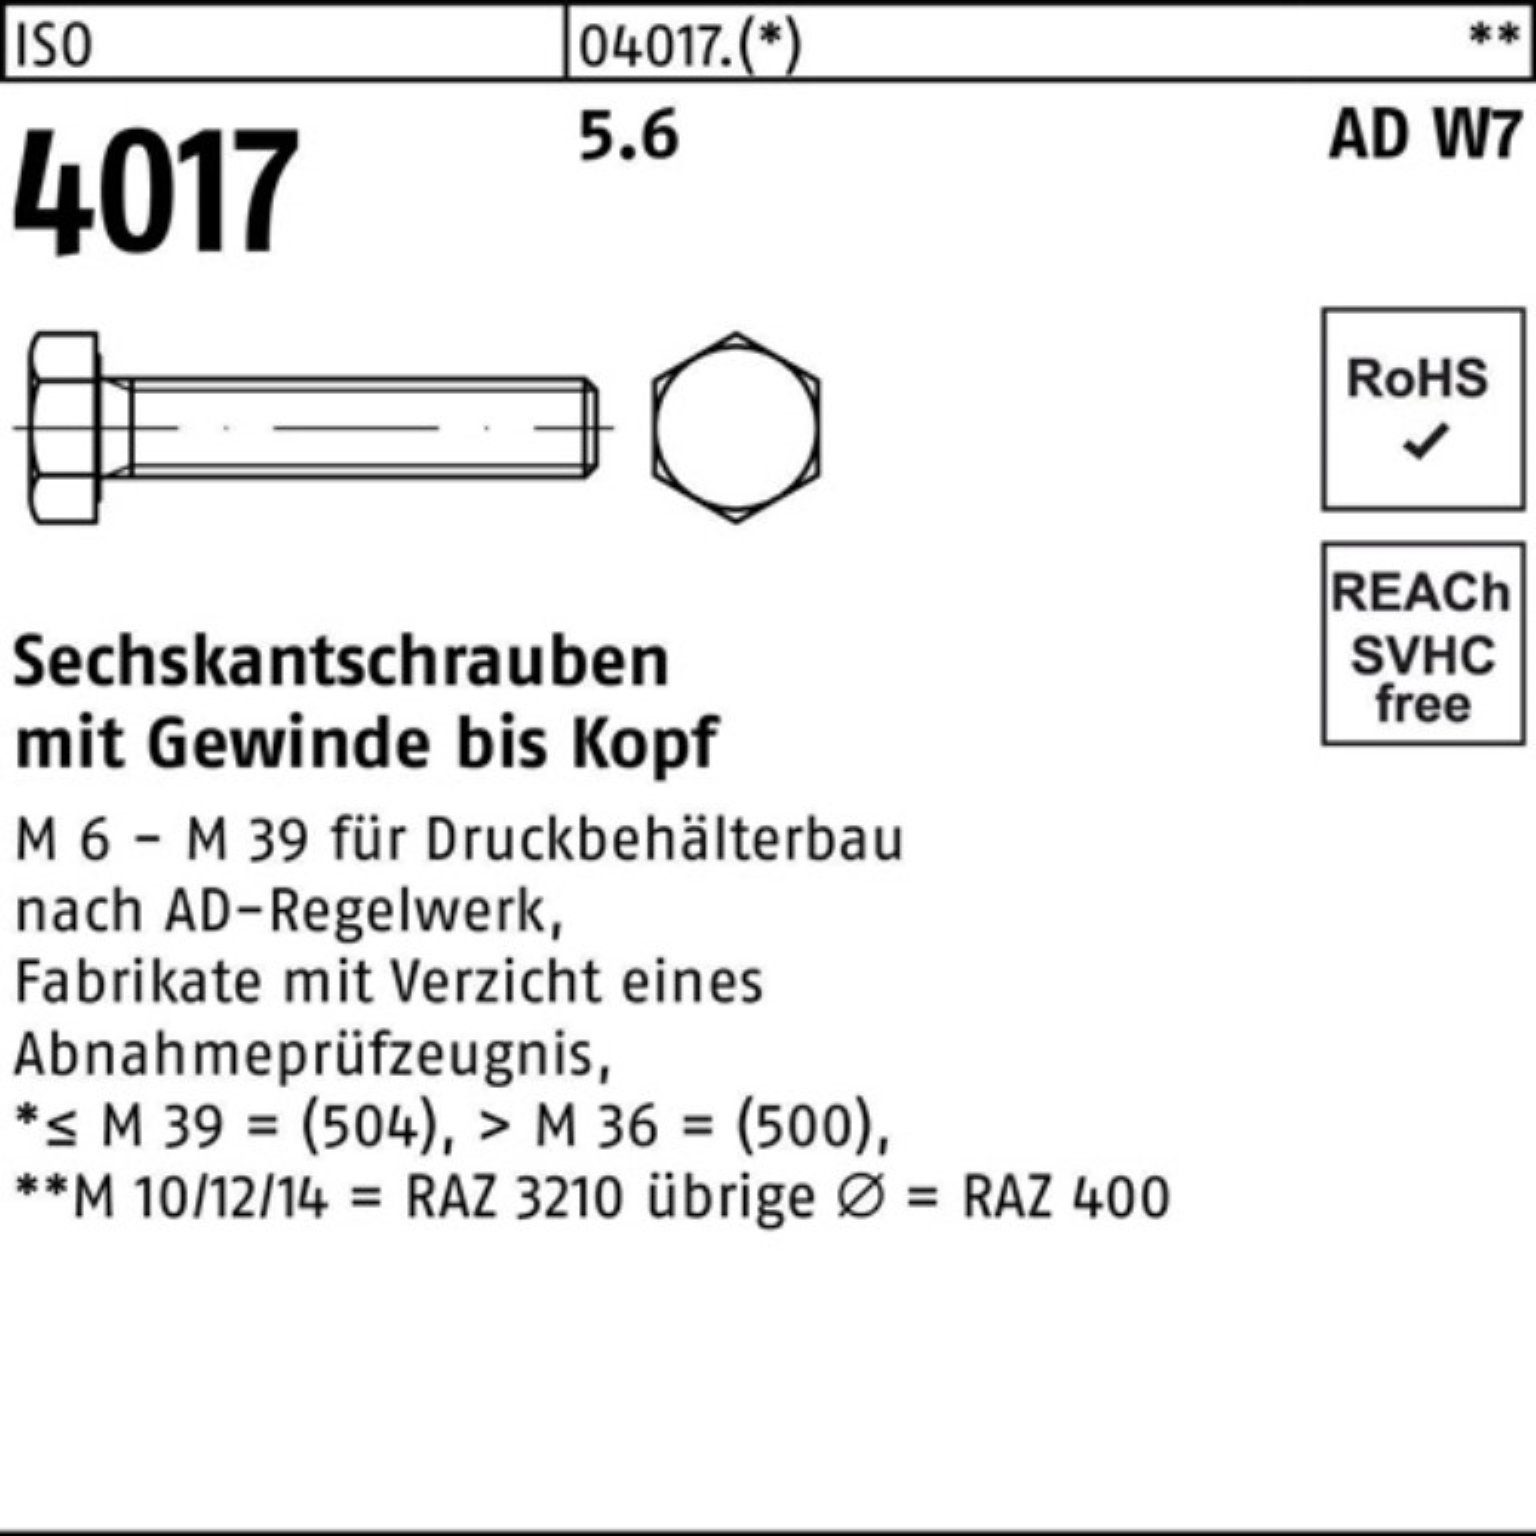 Bufab Sechskantschraube 100er Pack Sechskantschraube ISO 4017 VG M12x 30 5.6 AD W7 100 Stück